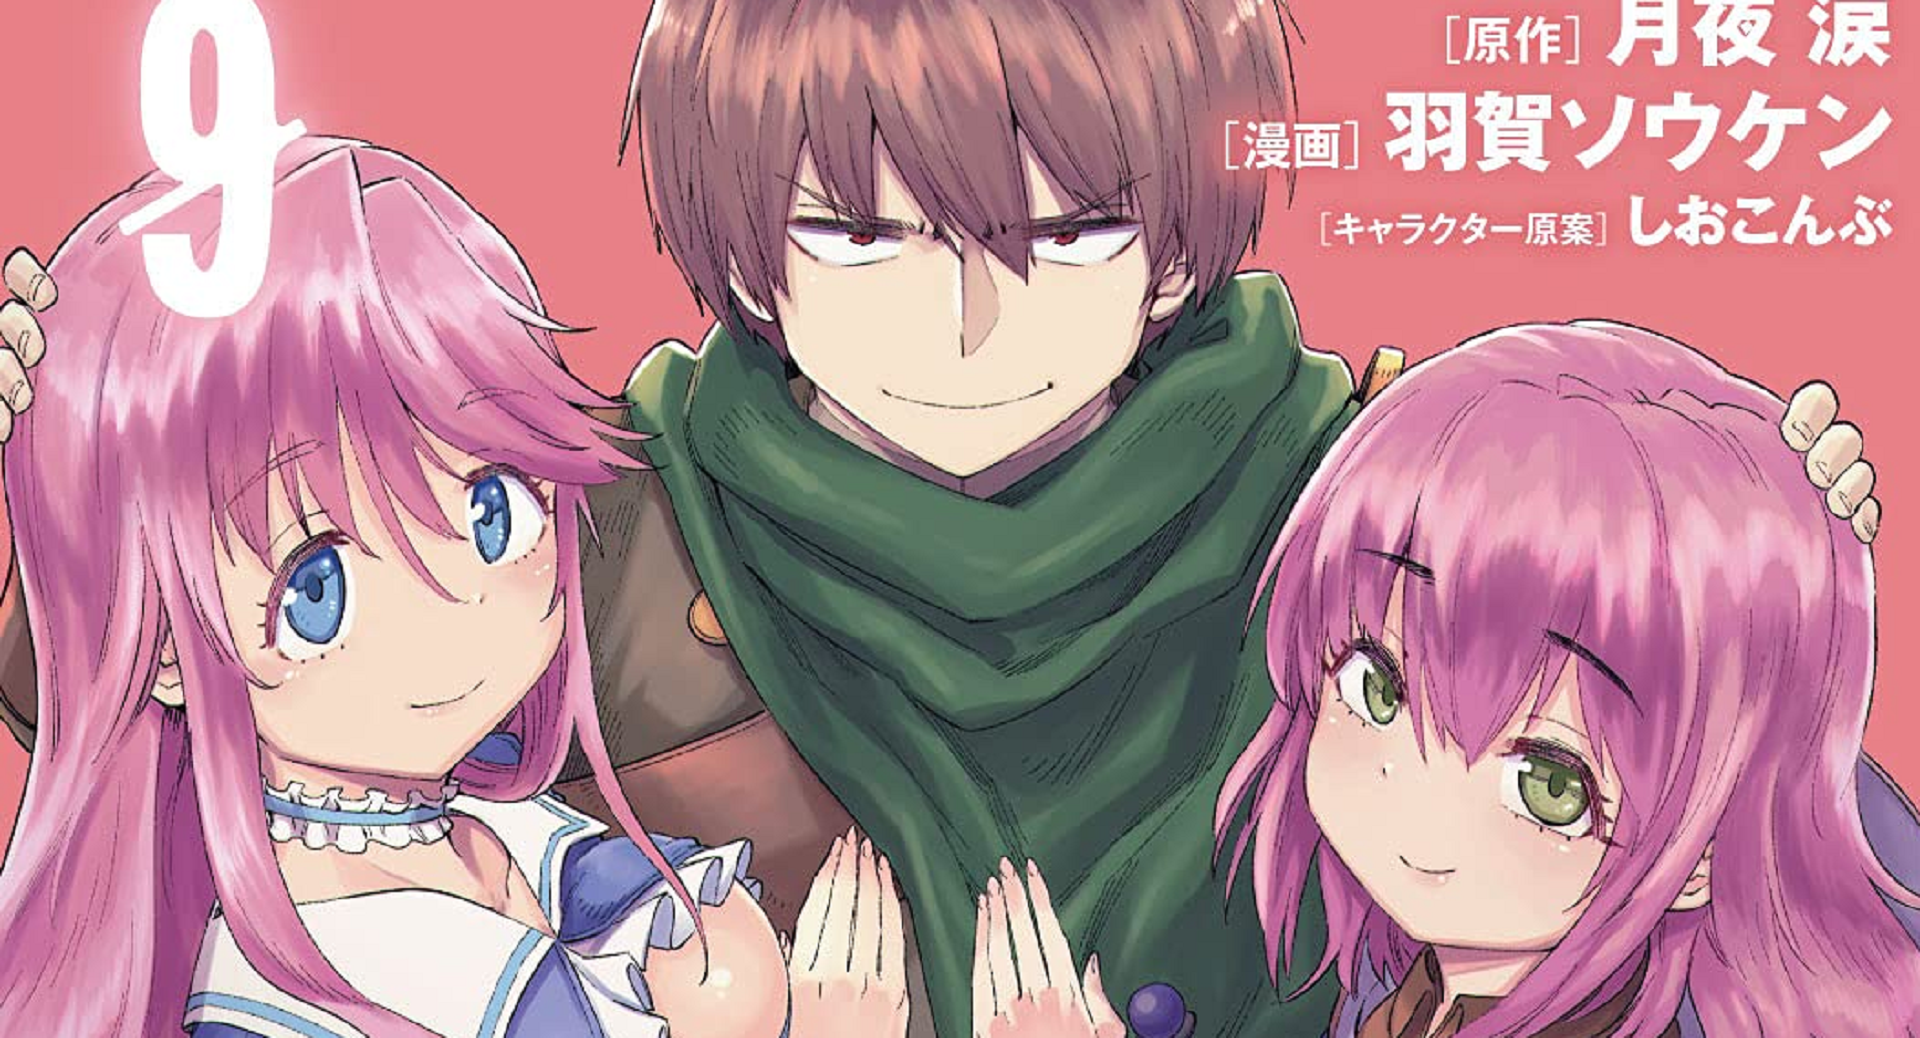 Redo of Healer Light Novel Has Over 2.3 Million Copies in Circulation -  Anime Corner